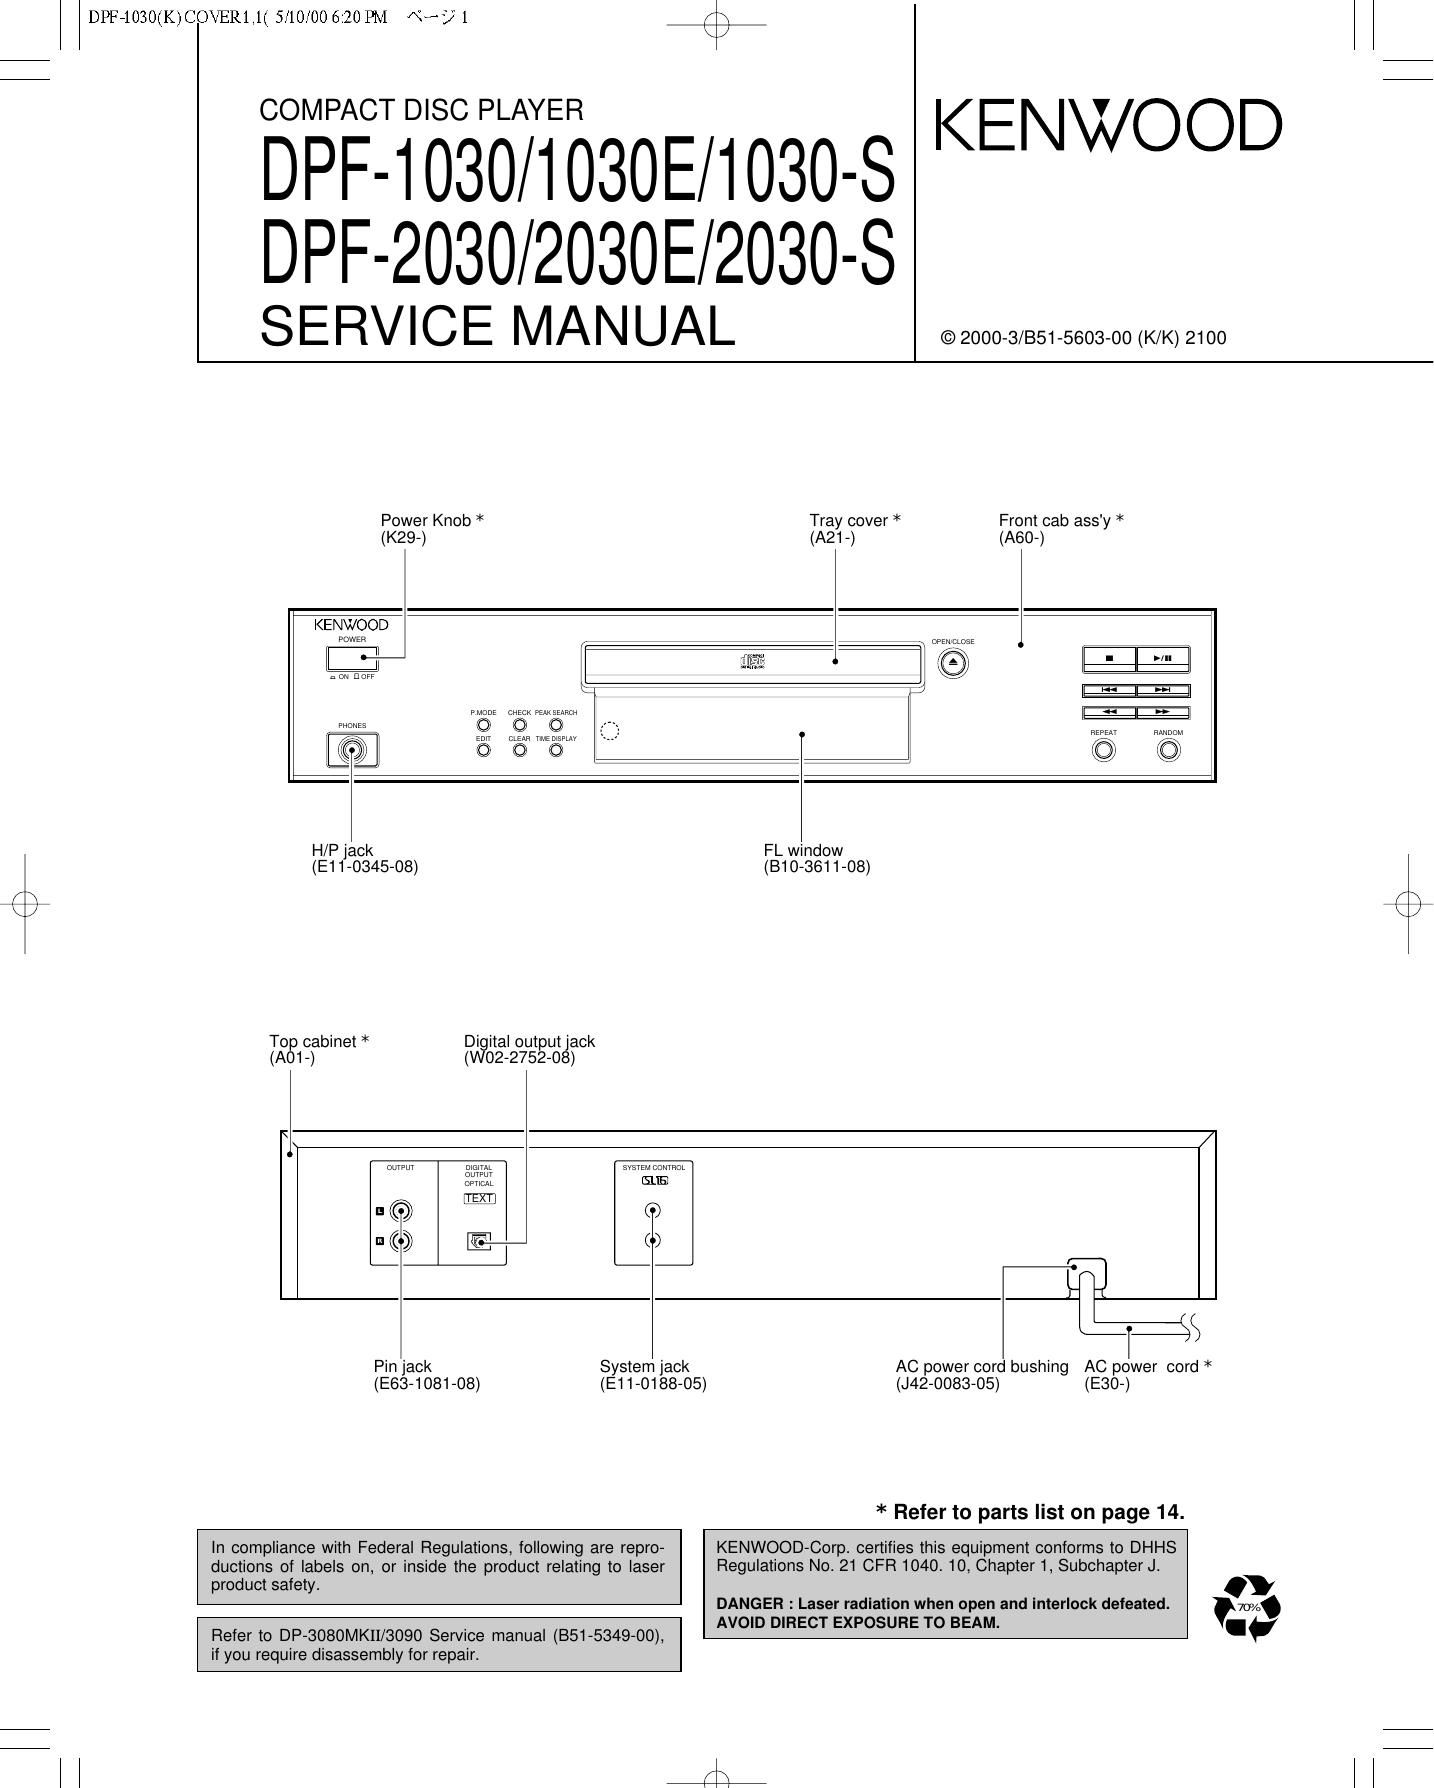 Kenwood DPF 2030 S Service Manual